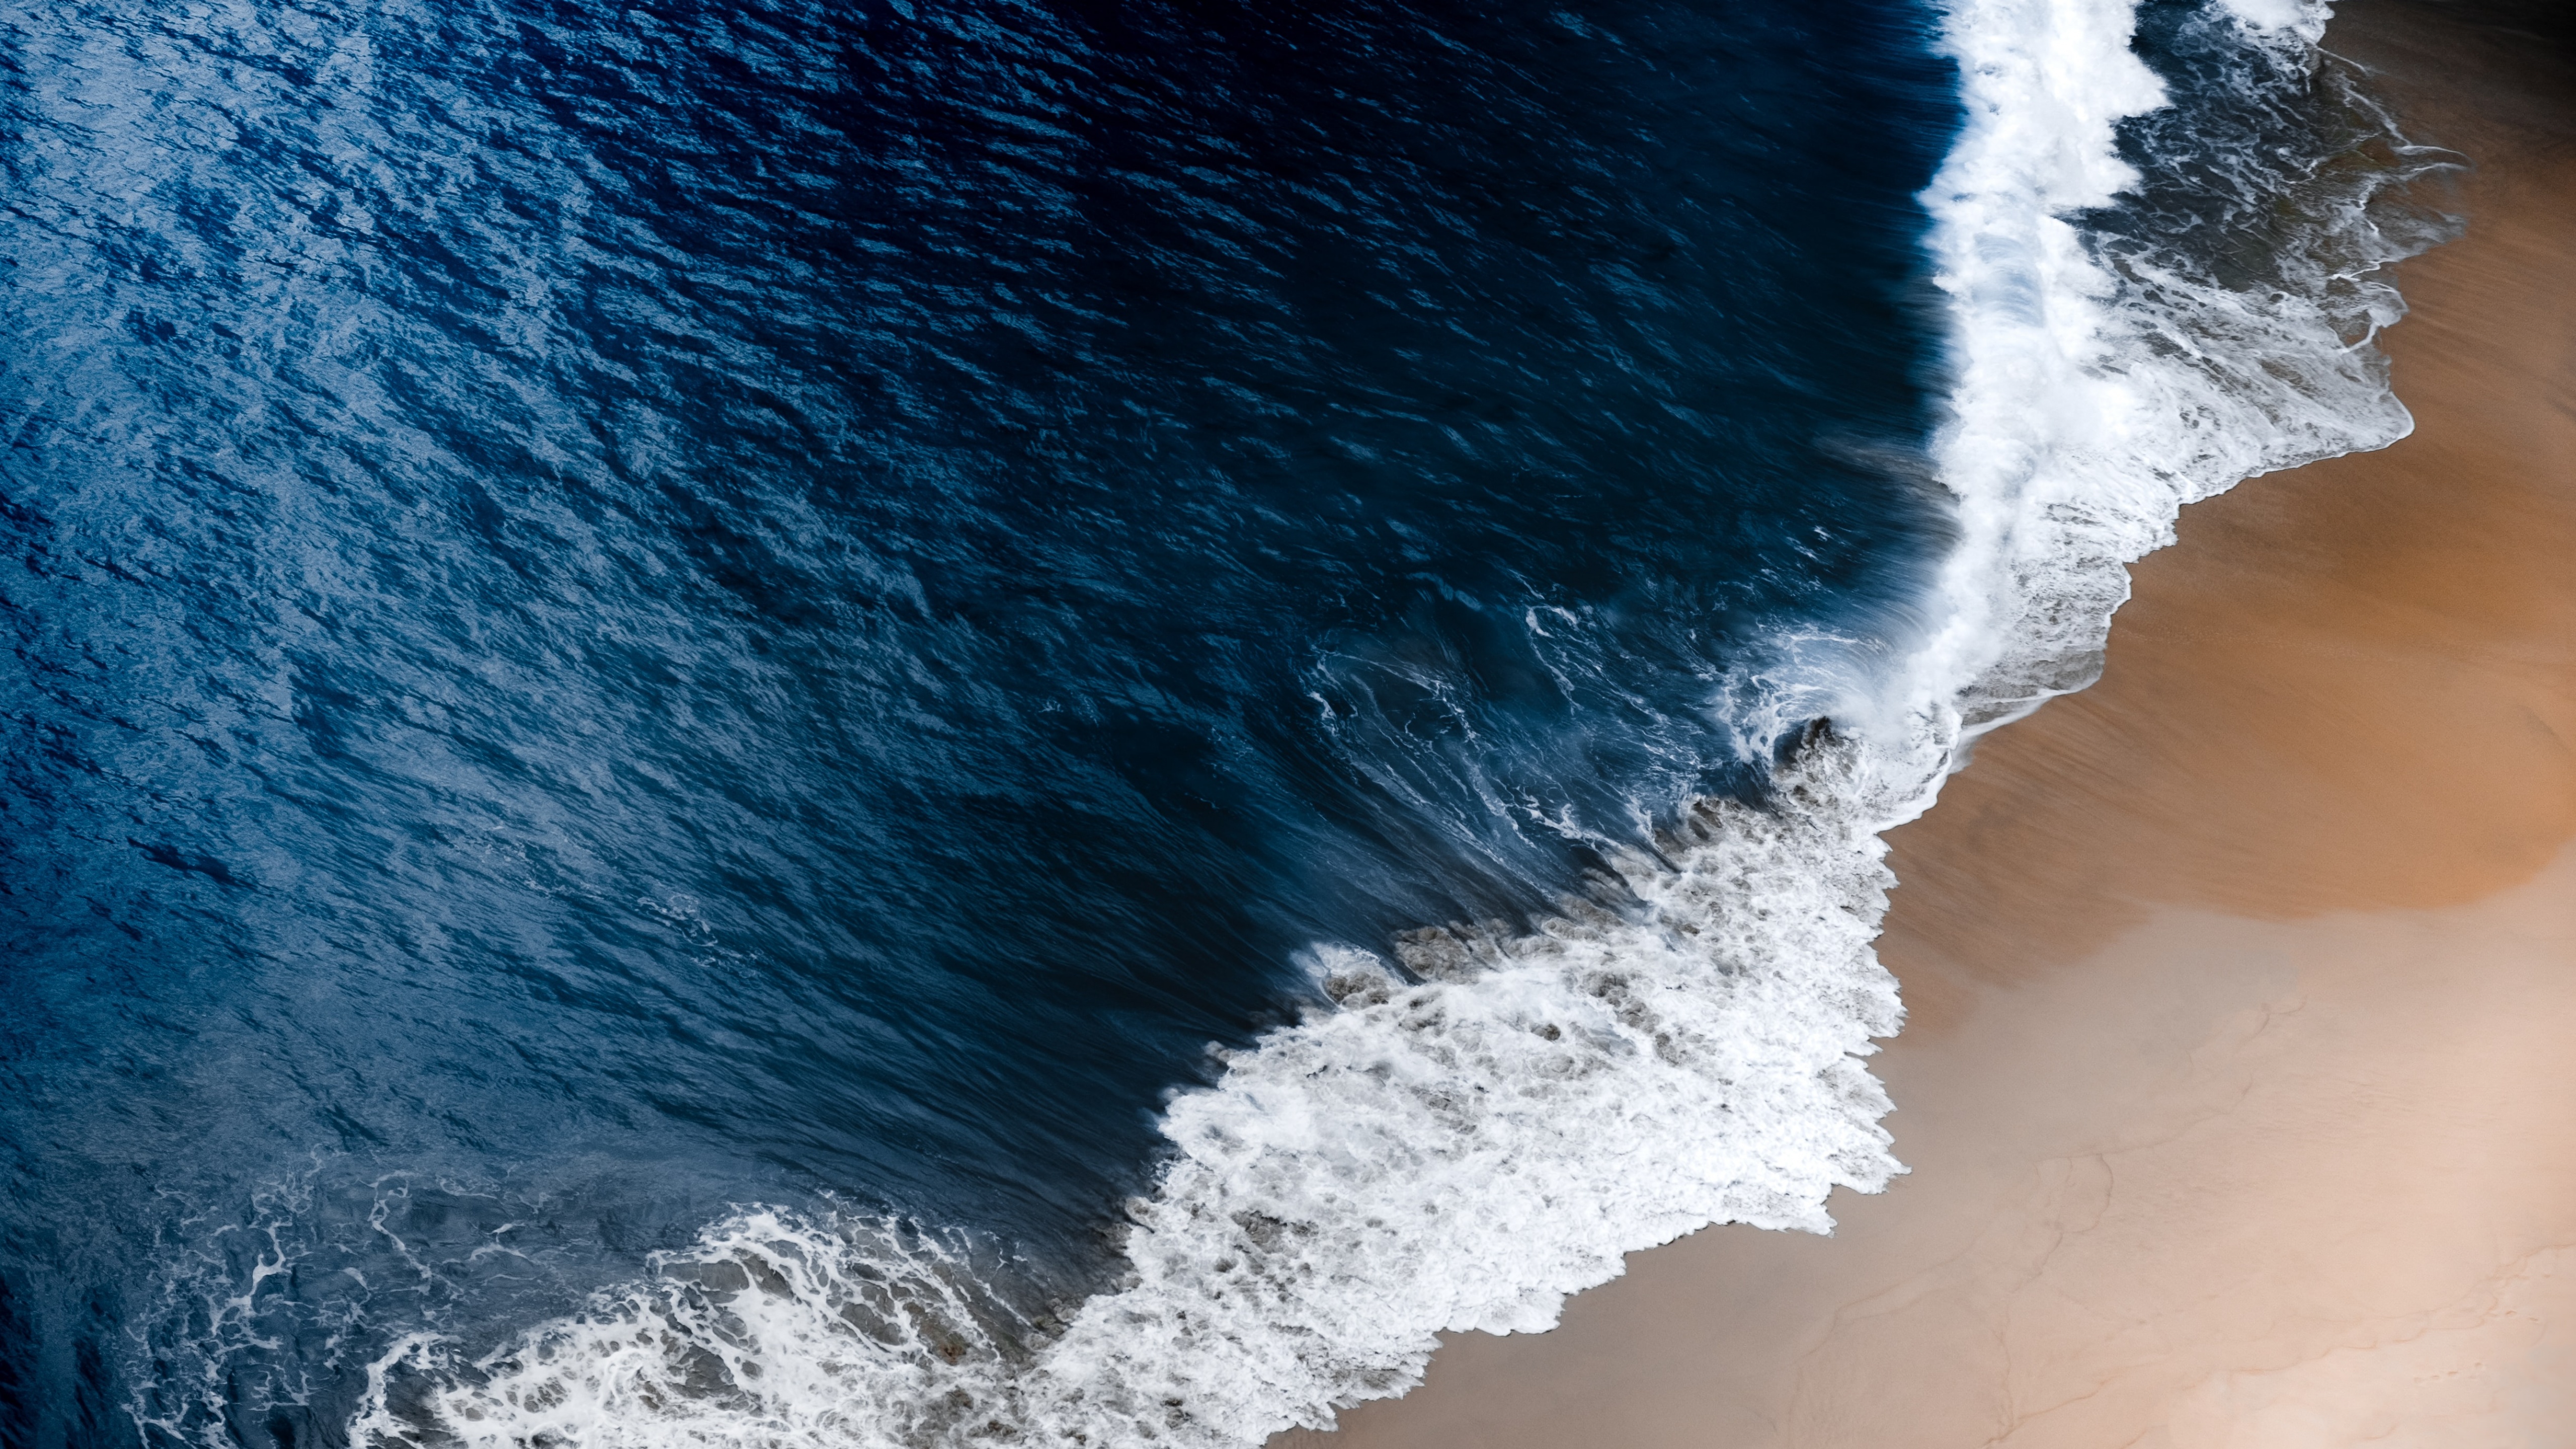 40,000+ Best Seashore Photos · 100% Free Download · Pexels Stock Photos